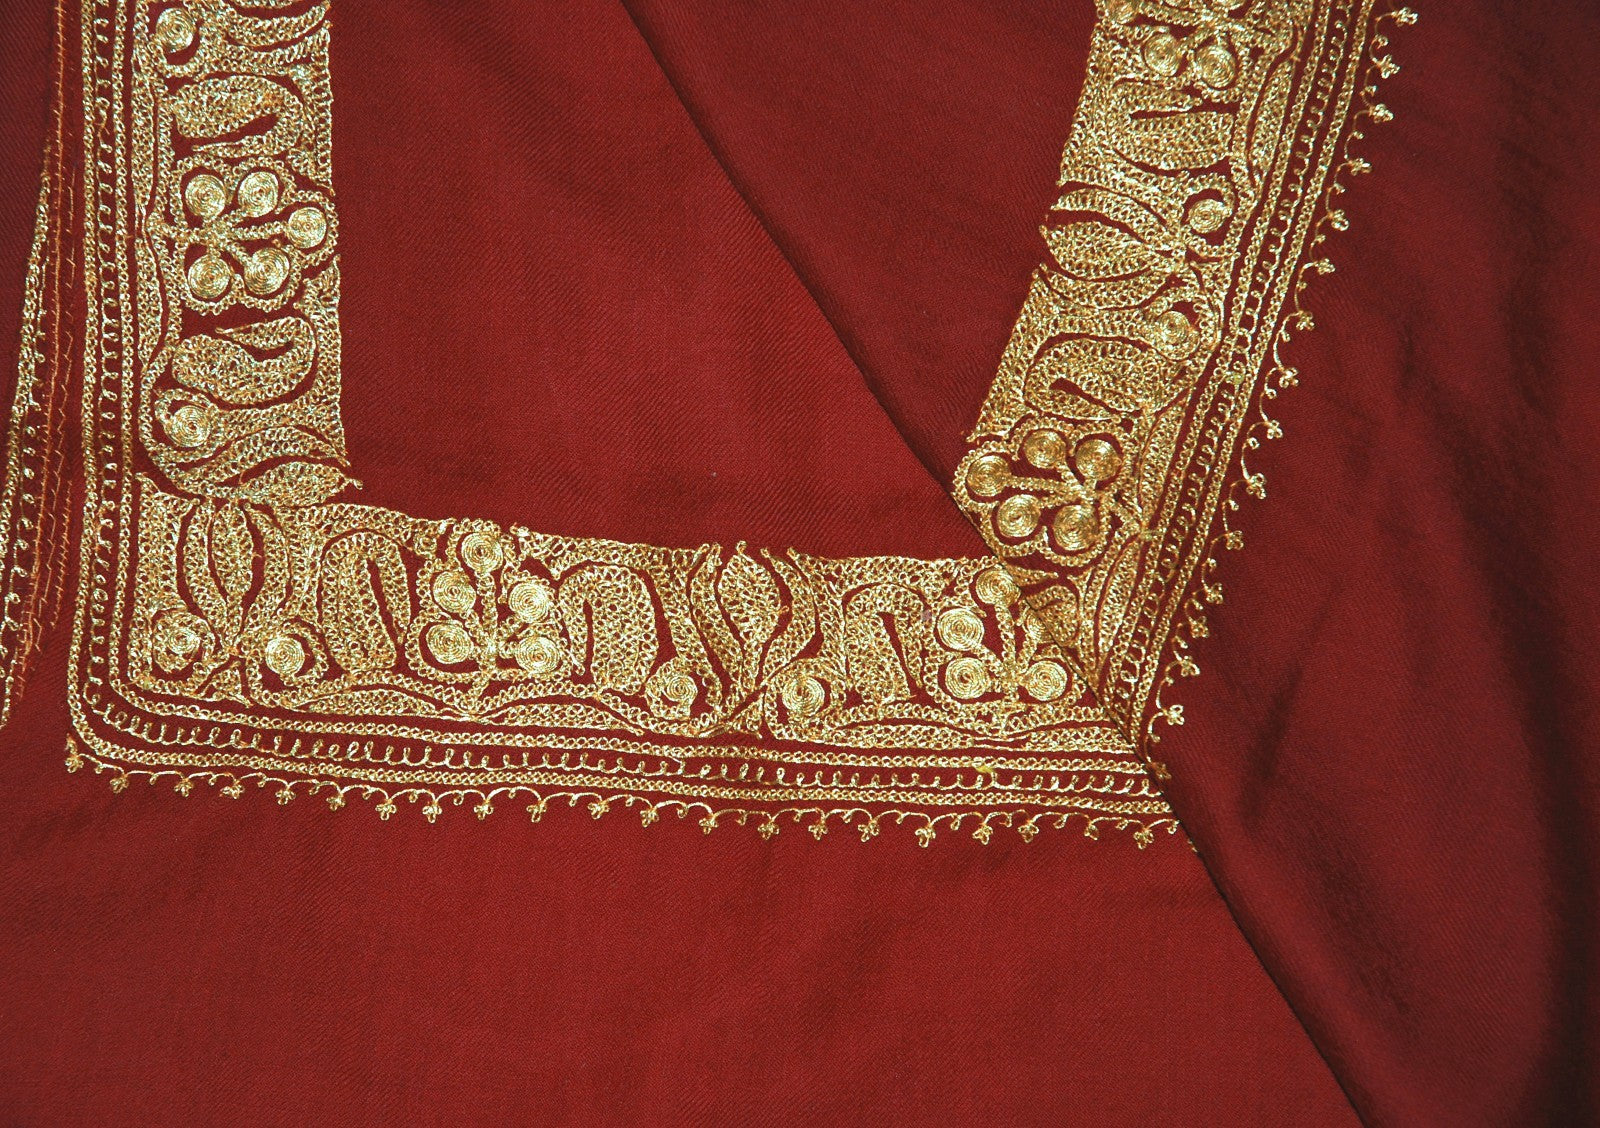 Embroidered Wool Shawl Maroon, Gold "Tilla" Sozni Embroidery #WS-923